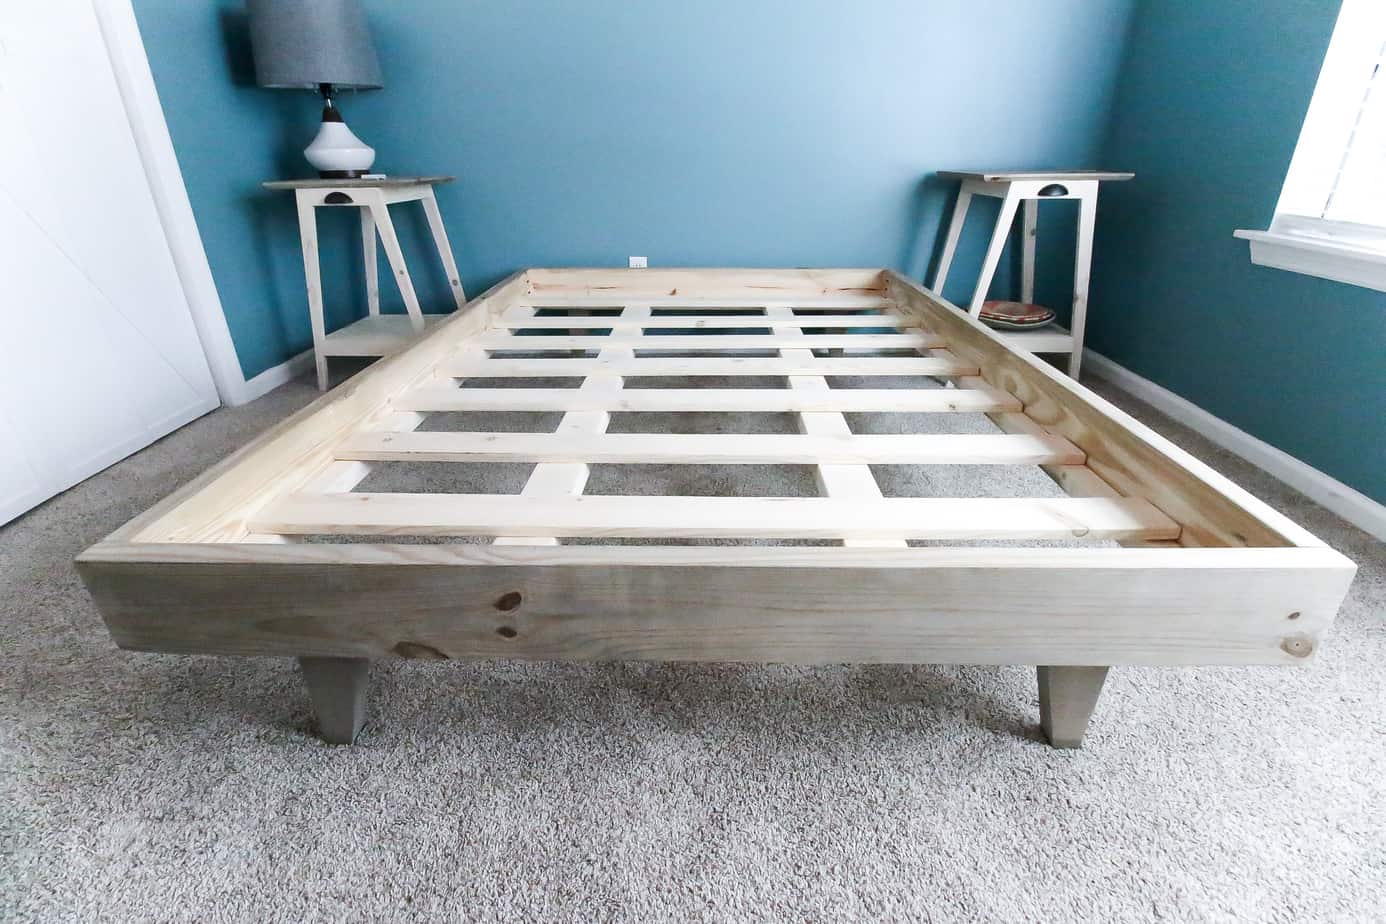 How To Build A Platform Bed For 50, Bed Frame Plans